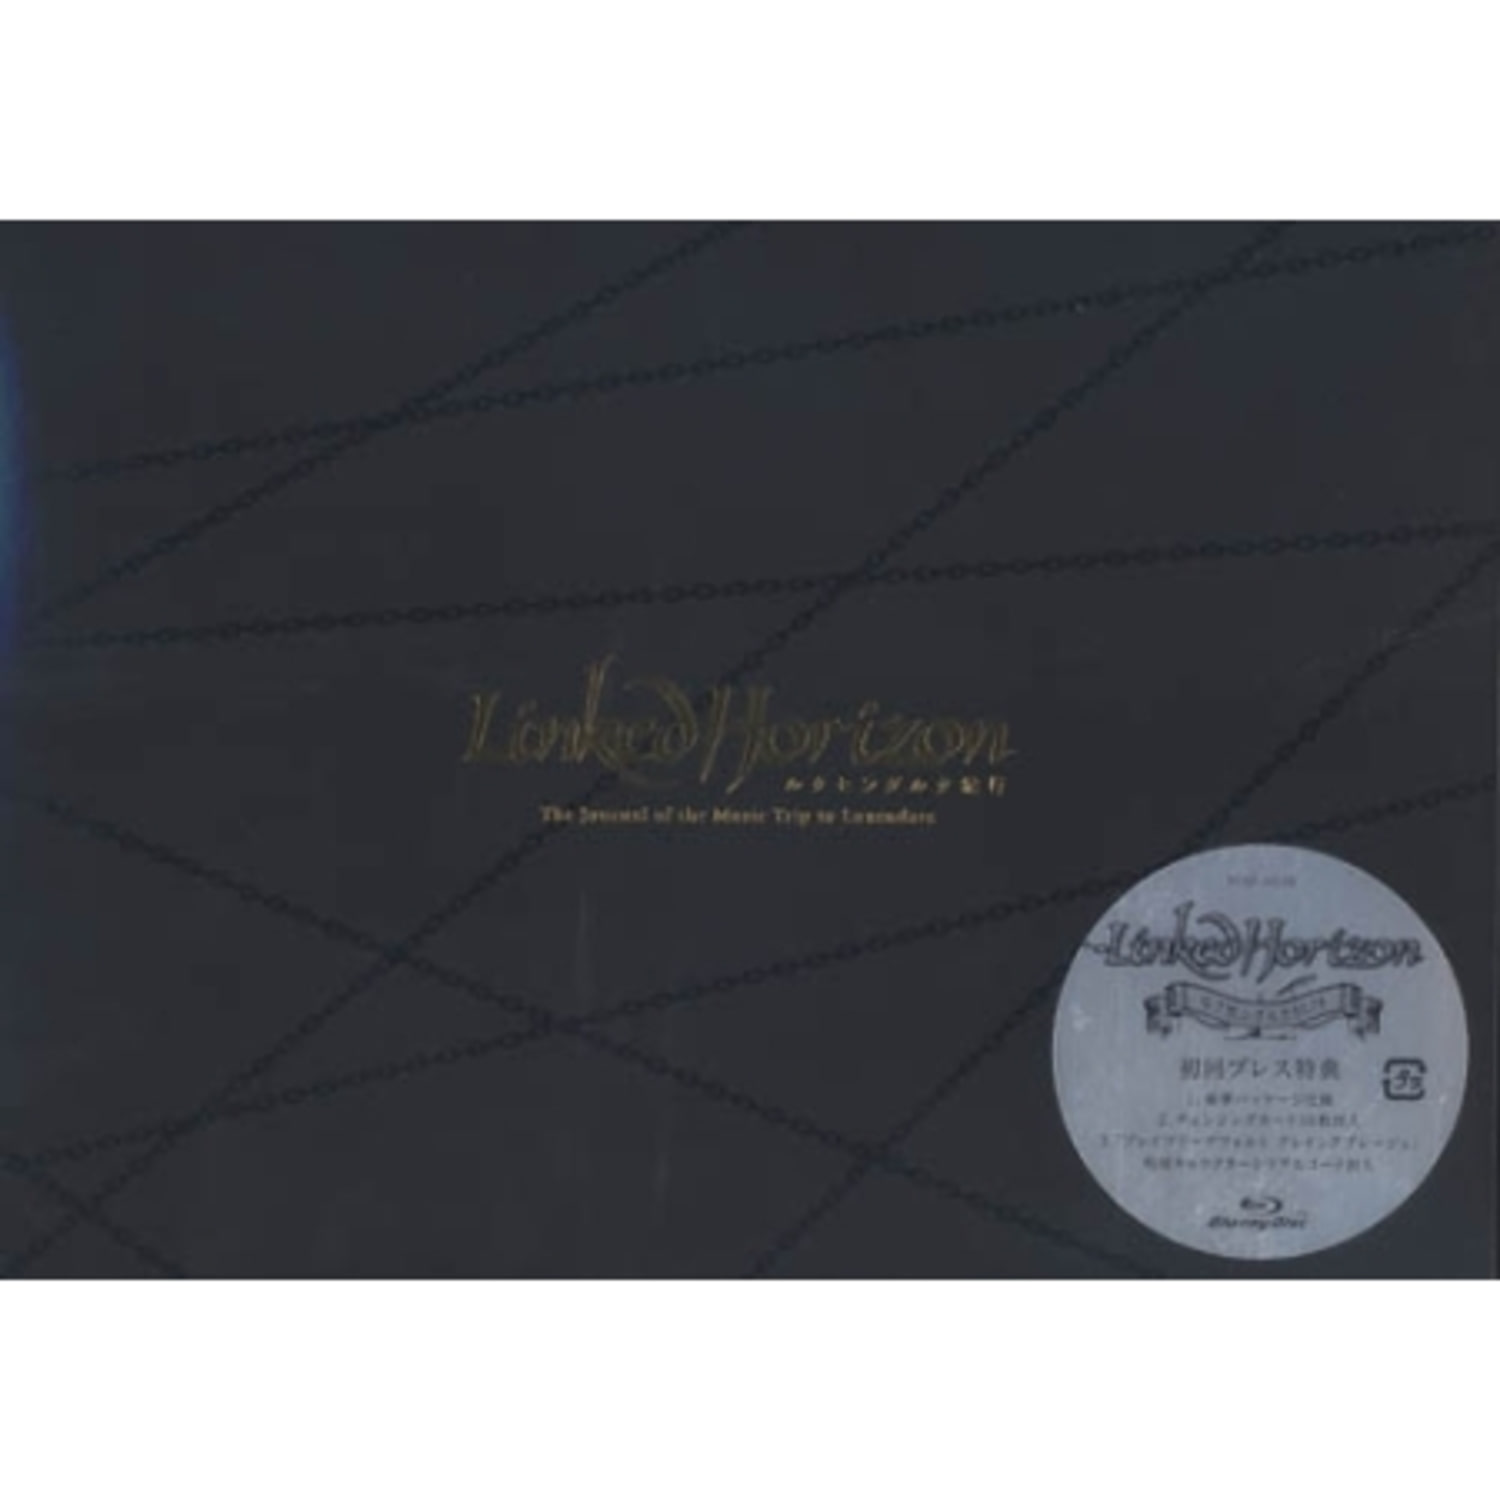 LINKED HORIZON - ルクセンダルク紀行 (1 DISC)